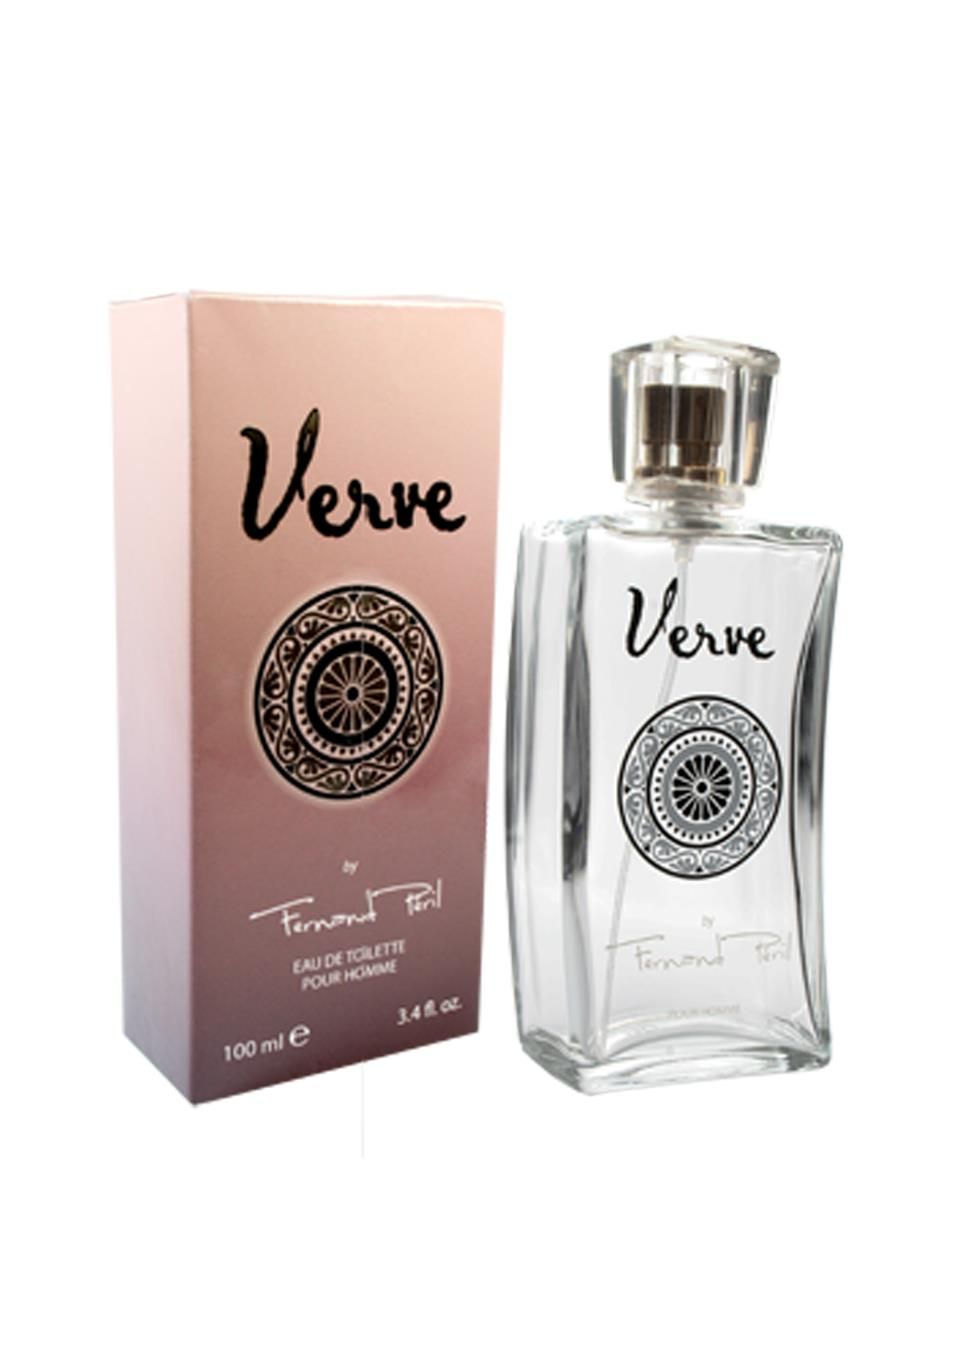 Perfumy dla Mężczyzn Verve Fernand Péril Man - Rozbudza Zmysły 100ml